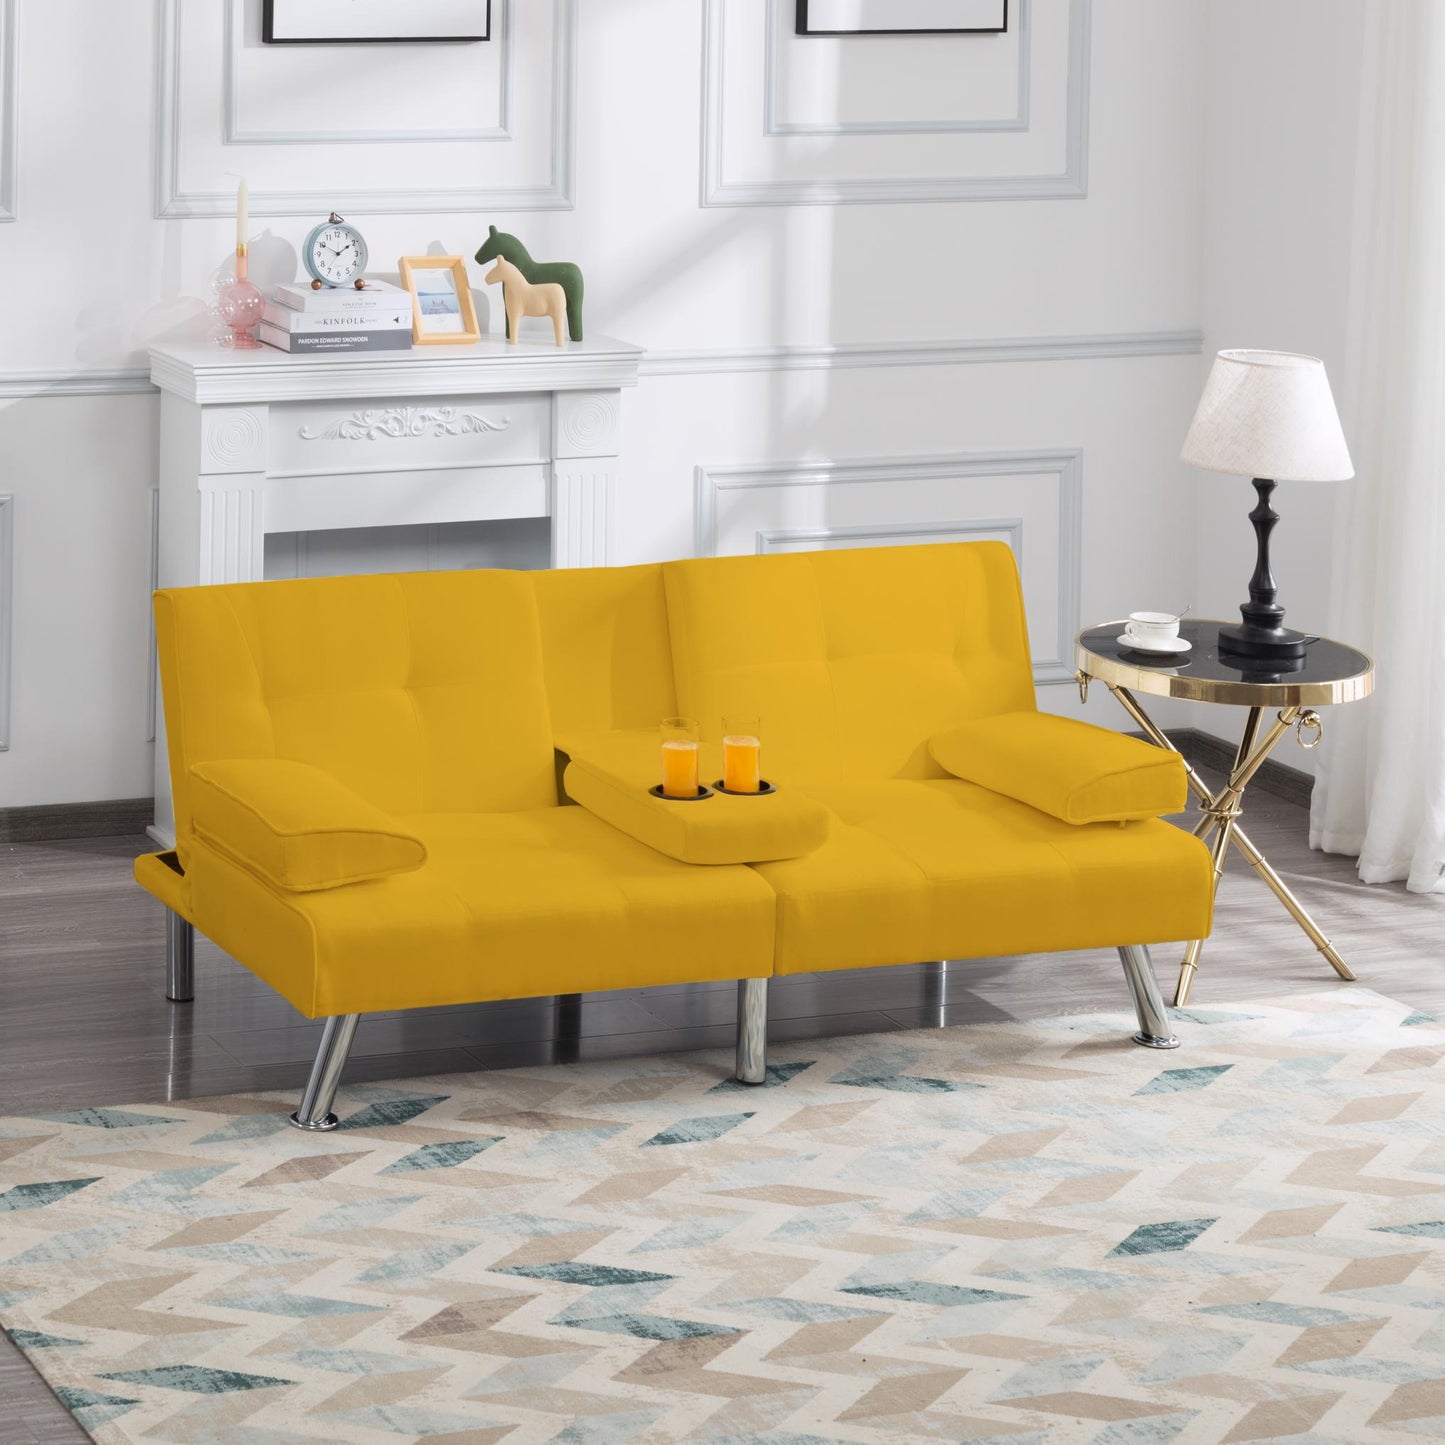 LAST™ Yellow Futon sofa bed